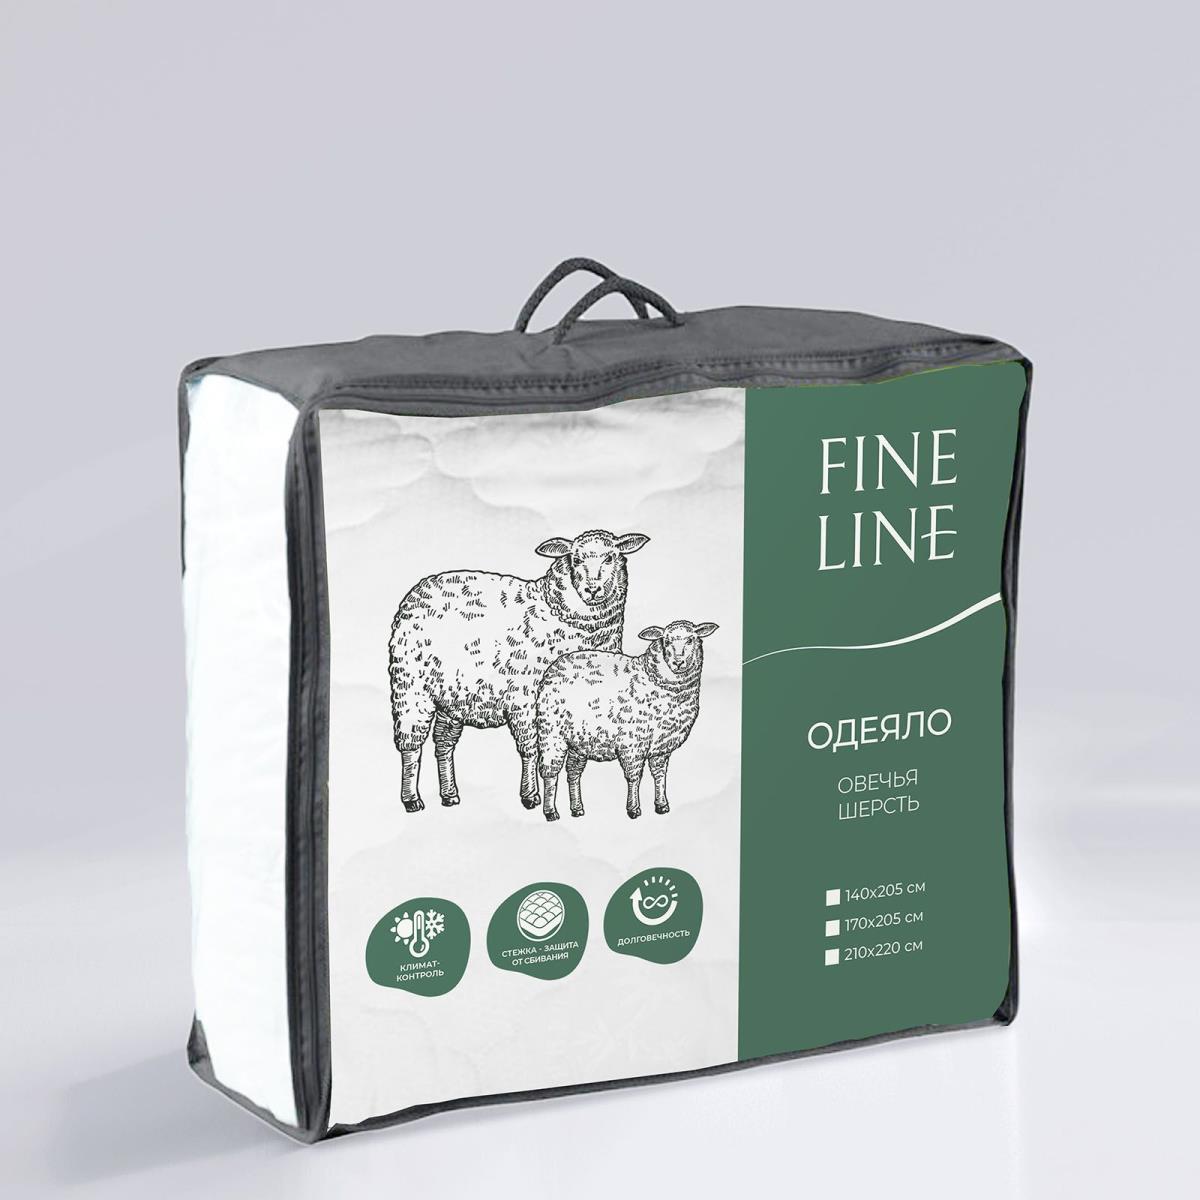  "Fine Line" Ideal 140205  